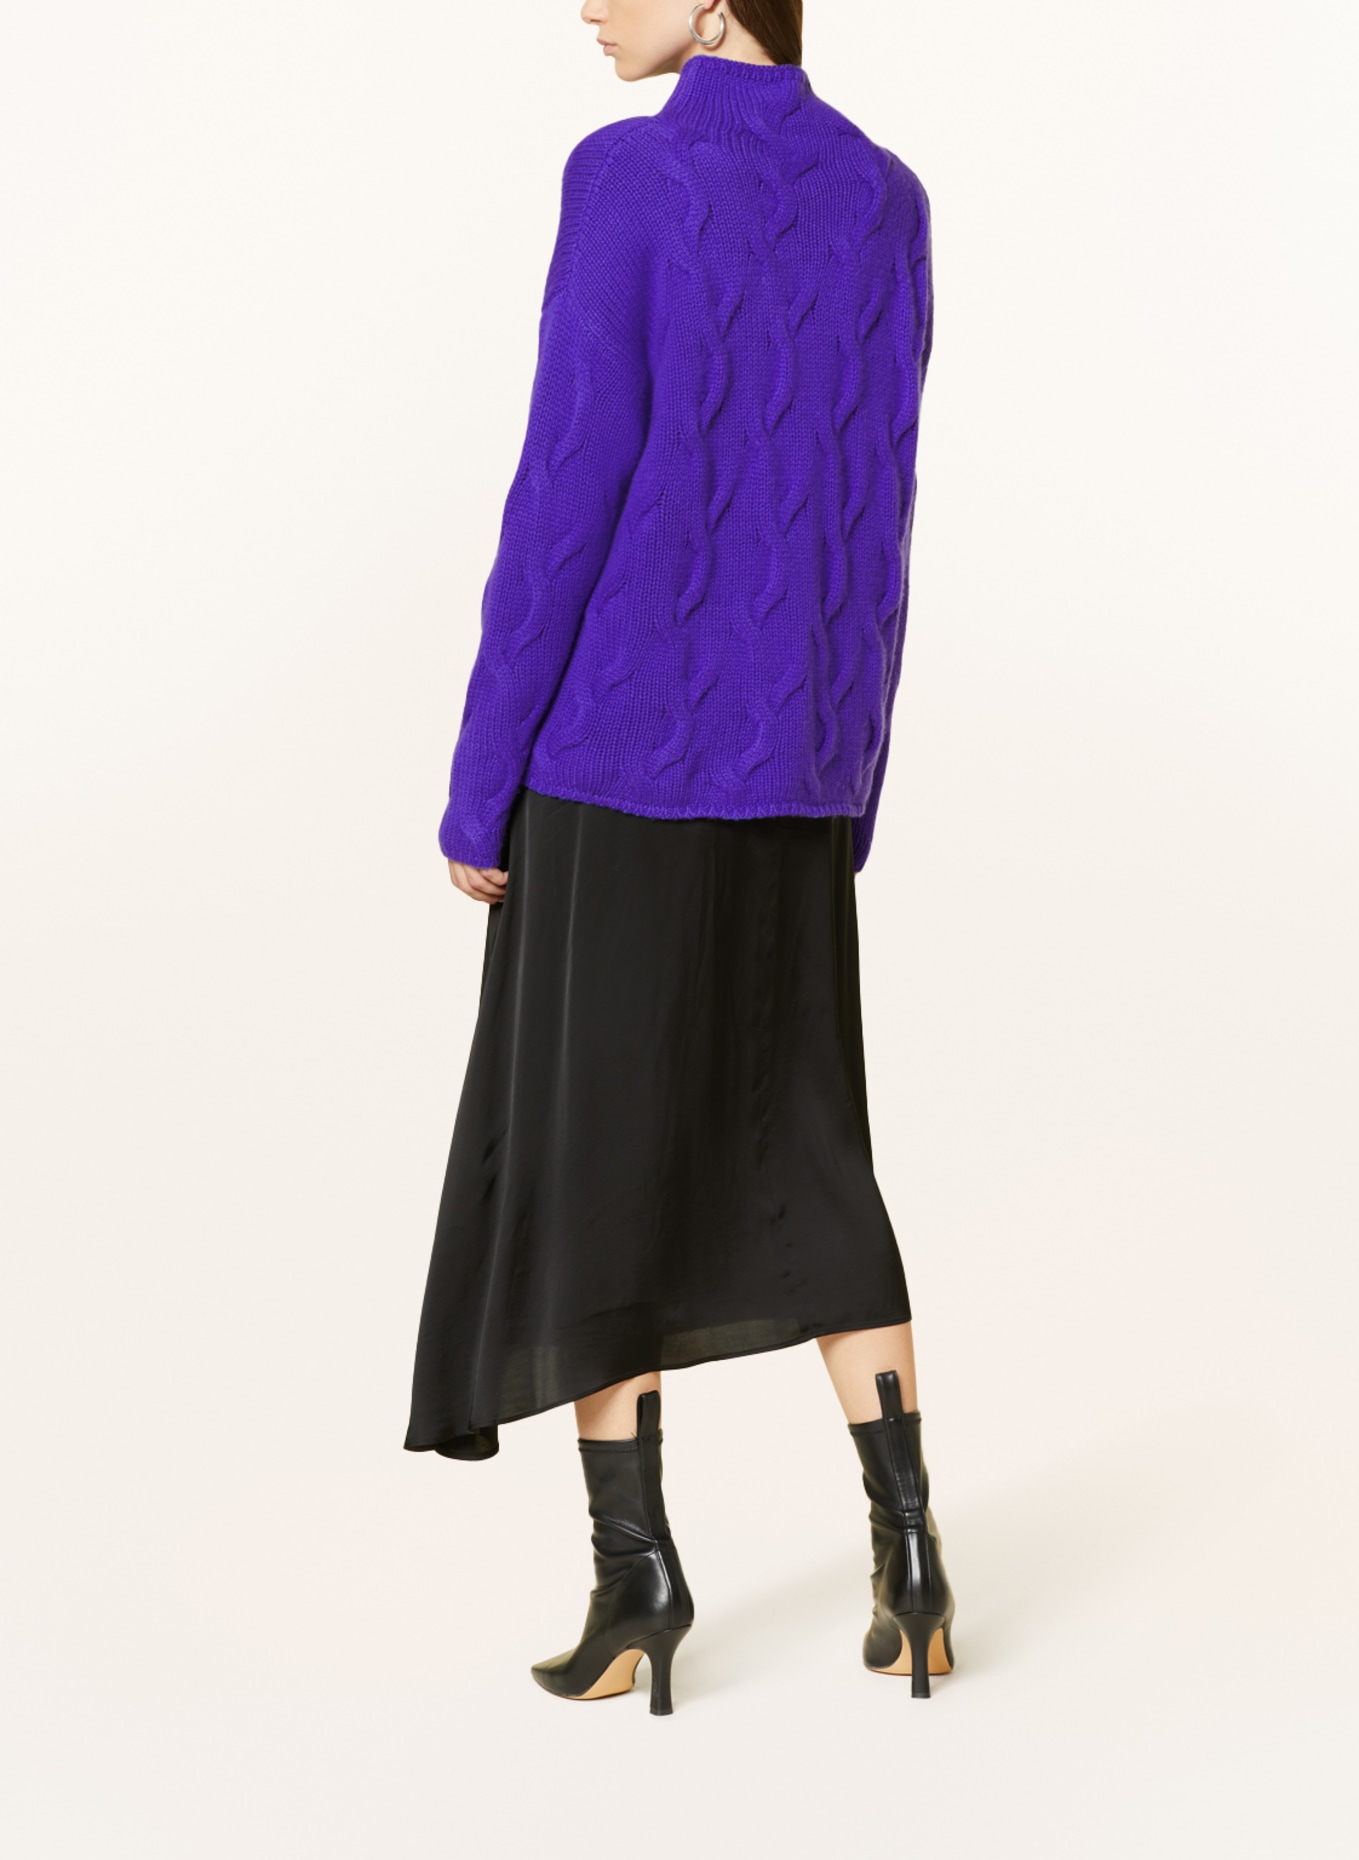 lilienfels Pullover mit Cashmere, Farbe: WLC-470650S lila (Bild 3)